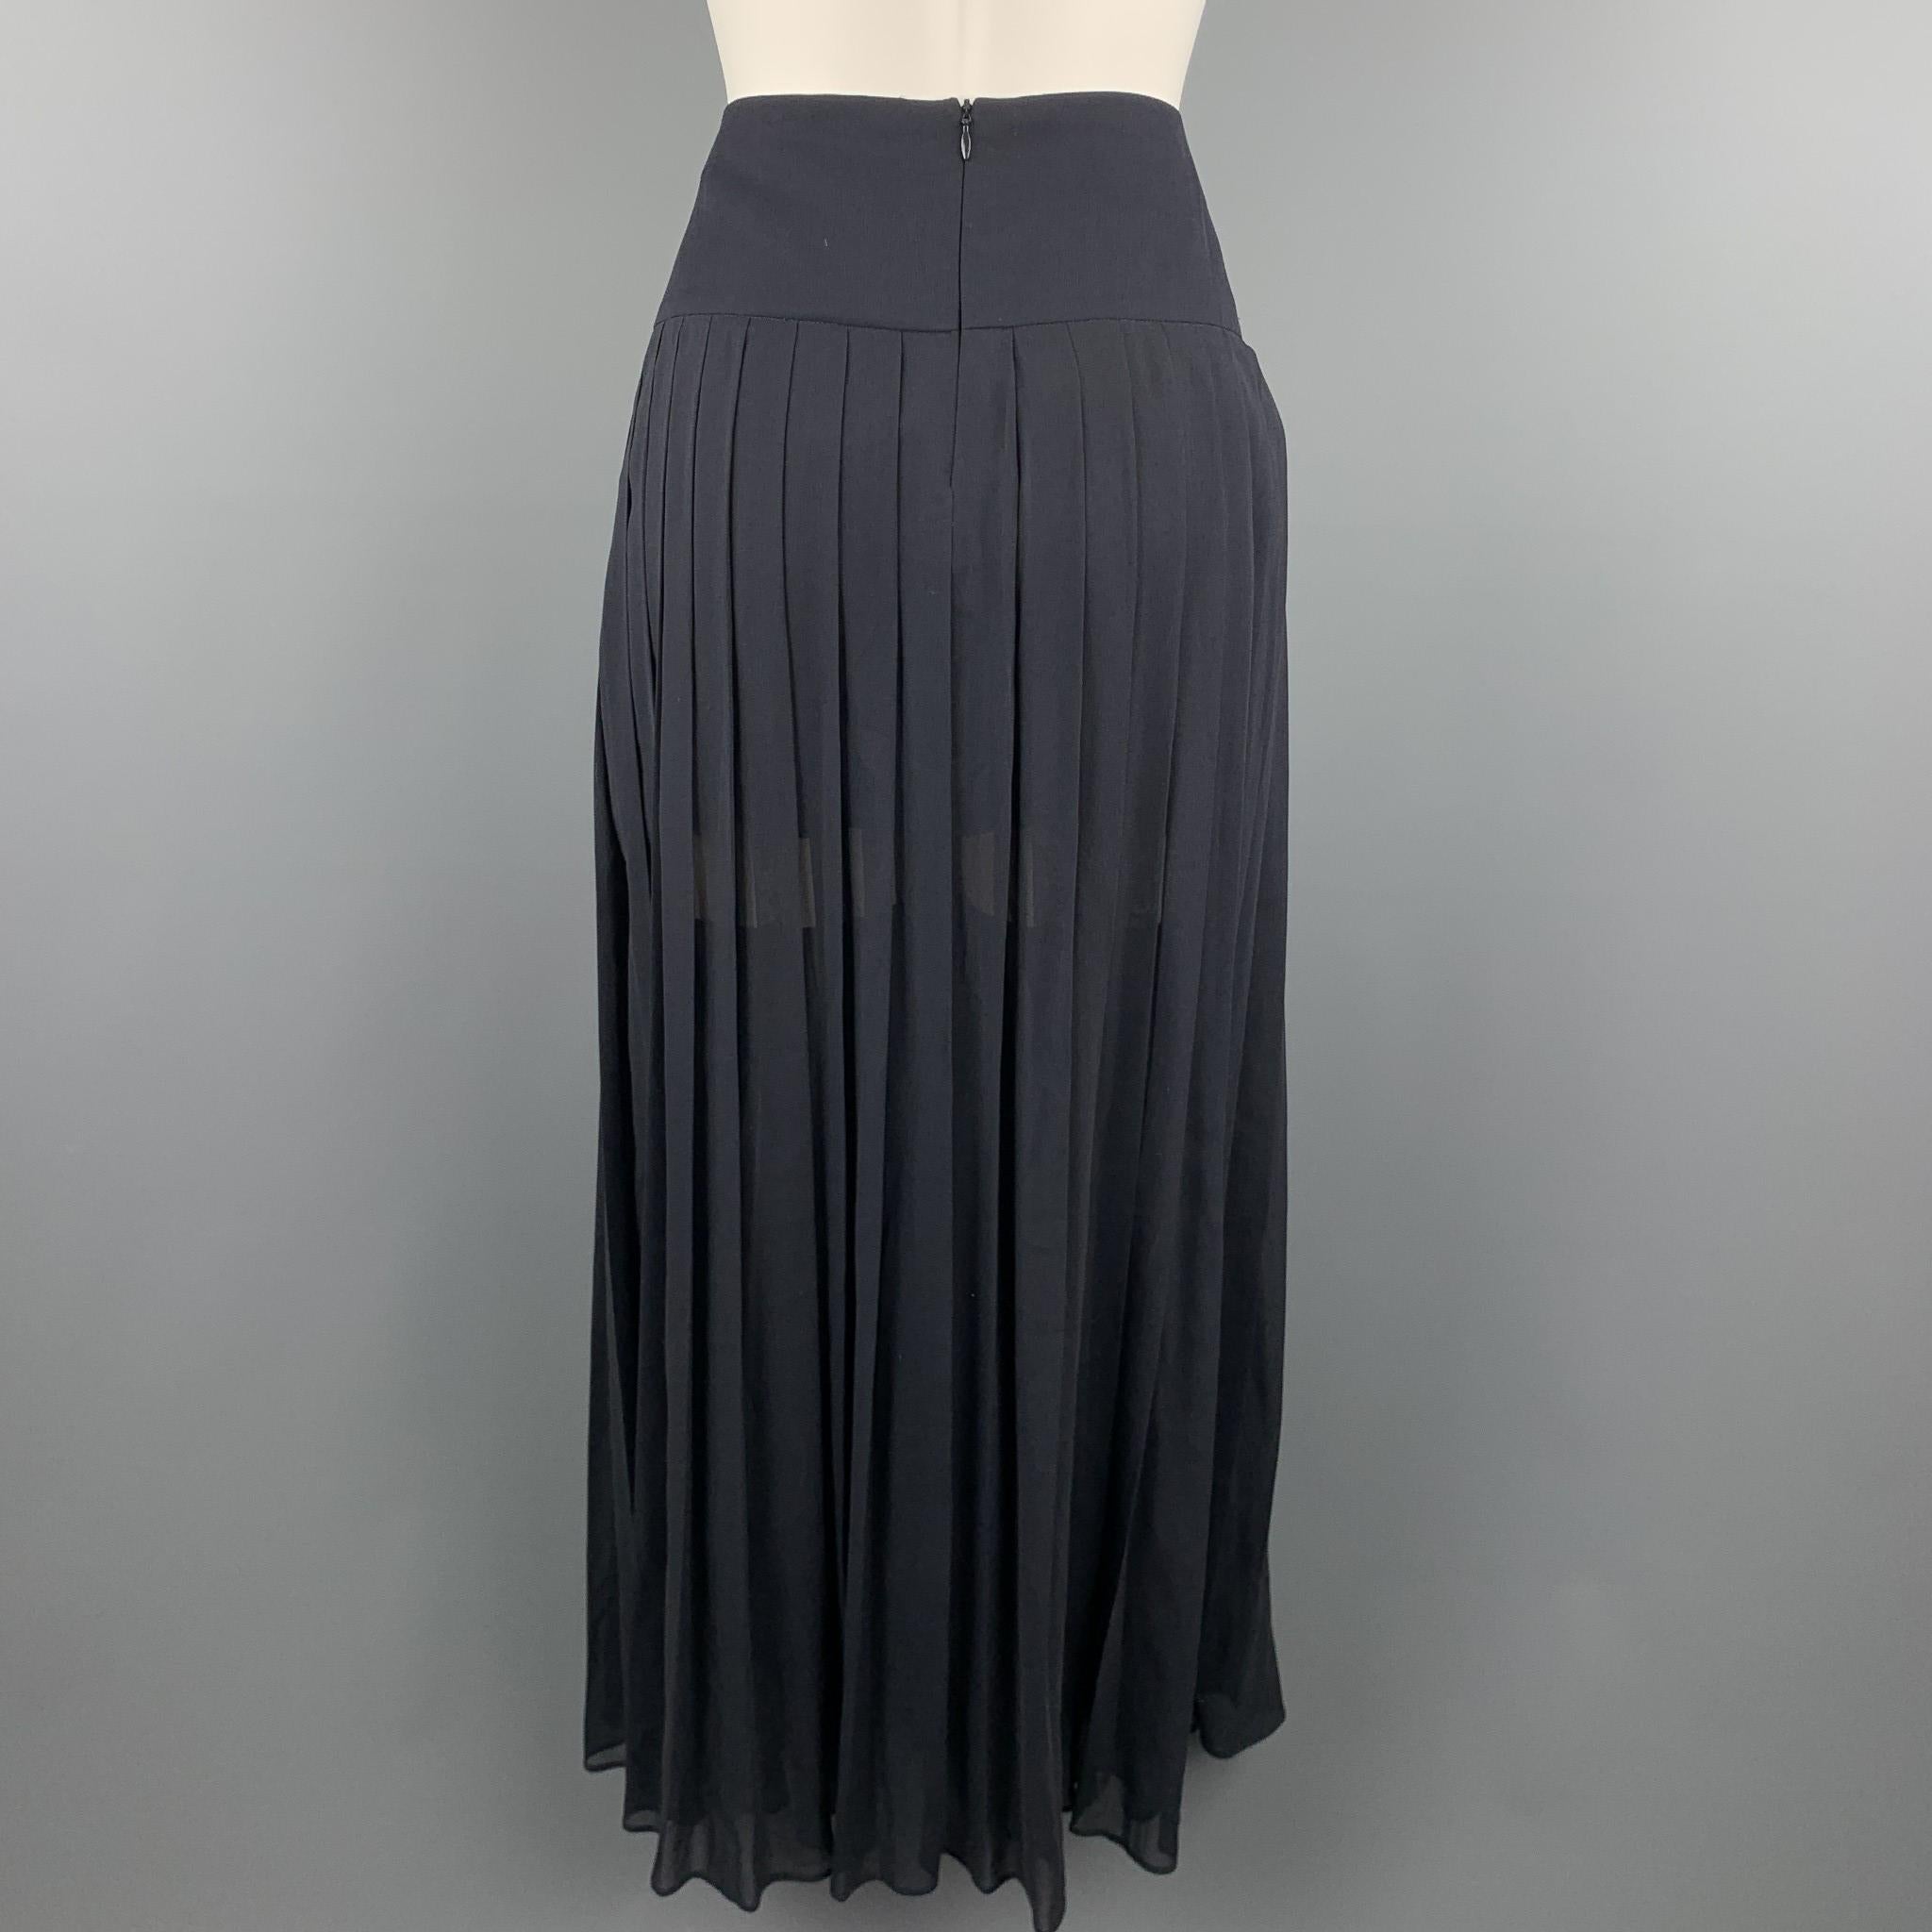 navy blue pleated maxi skirt